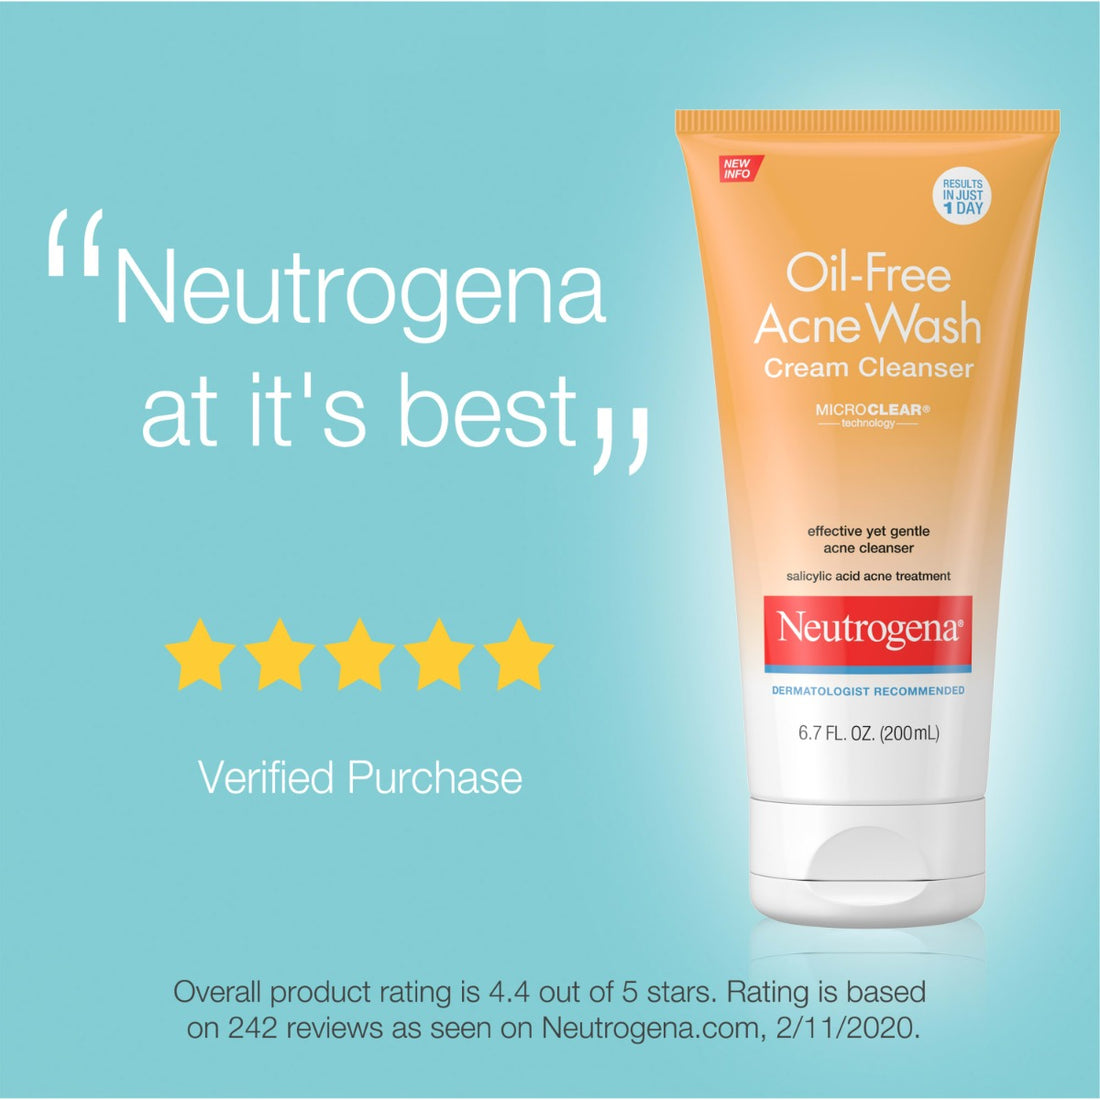 Neutrogena Oil-Free Acne Wash Cream Cleanser (200ml)